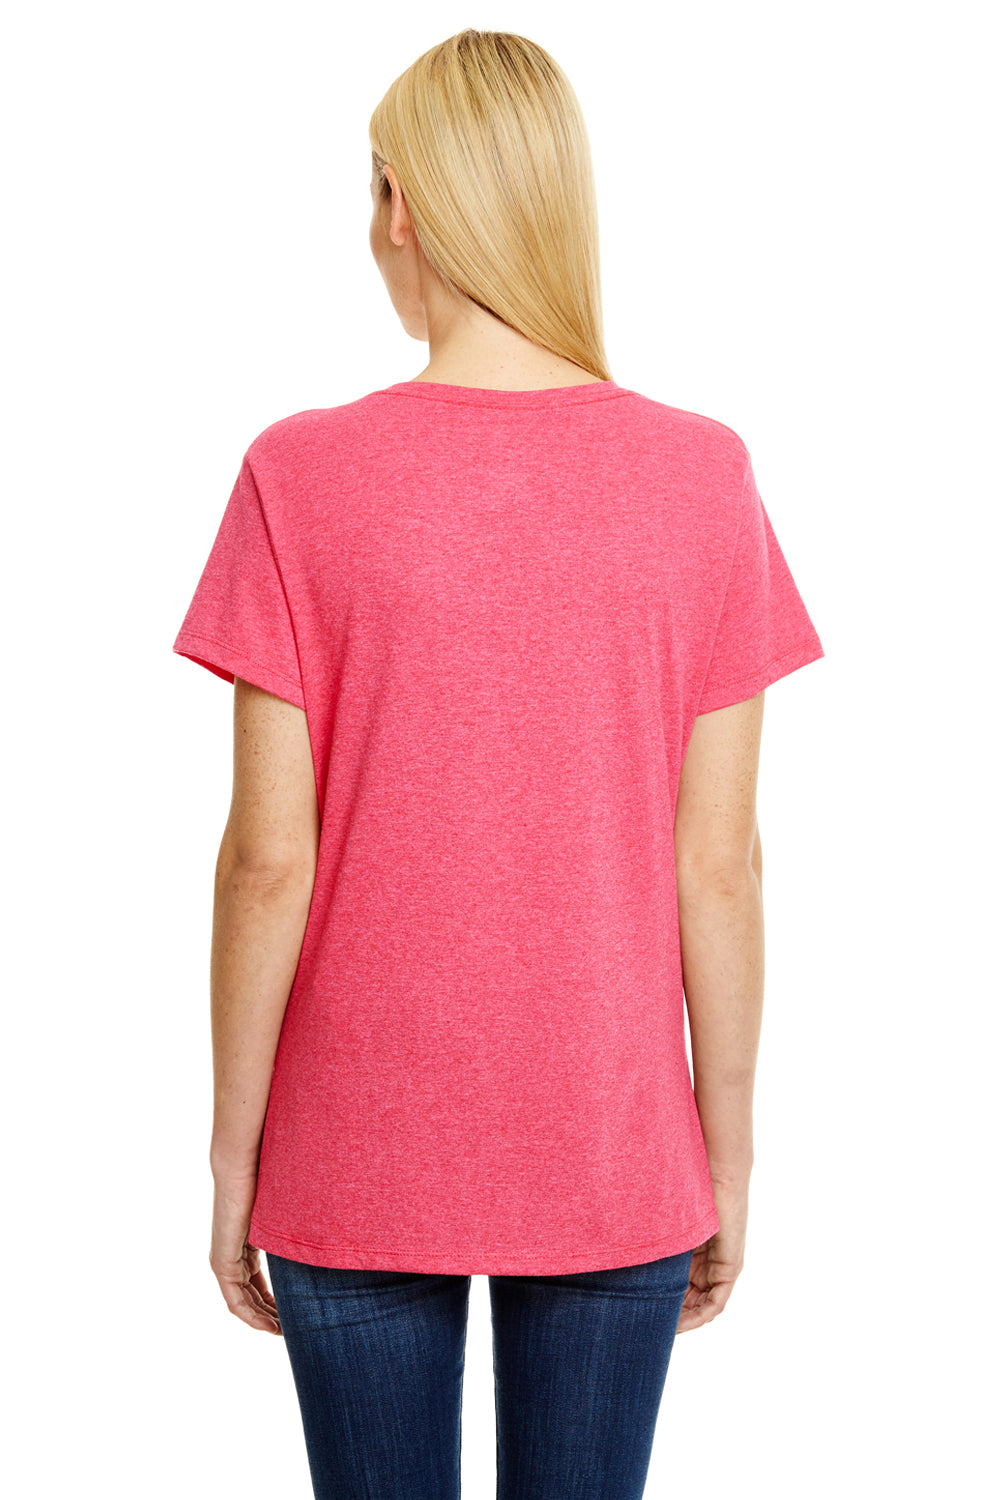 Hanes 42VT Womens X-Temp FreshIQ Moisture Wicking Short Sleeve V-Neck T-Shirt Red Back